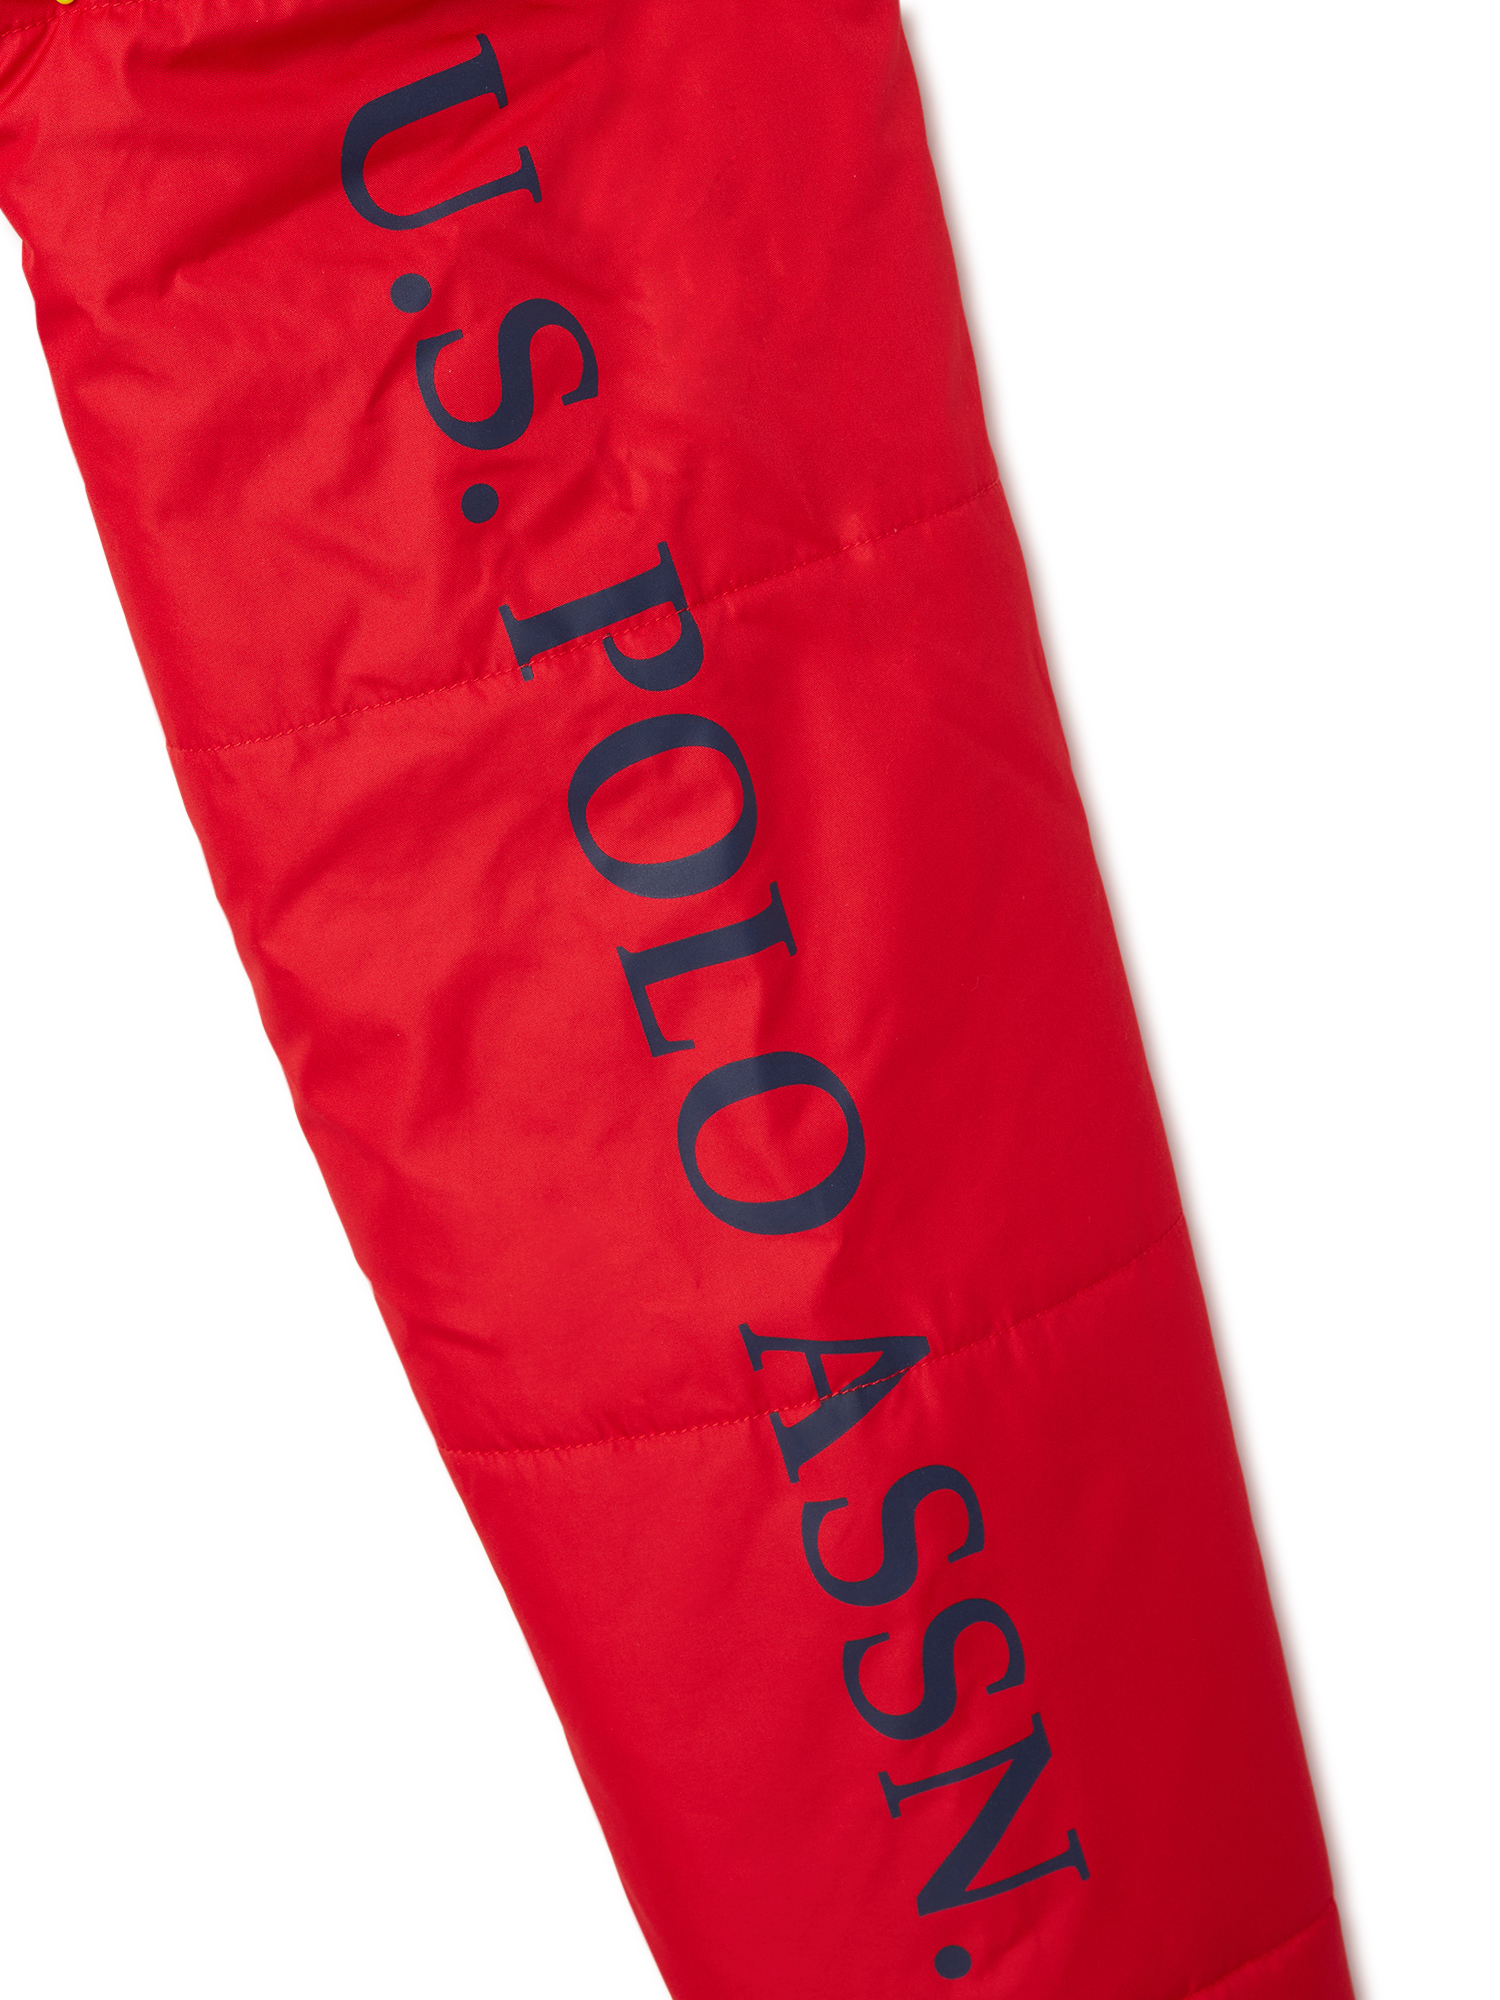 U.S. Polo Assn. Boys’ Logo Puffer Jacket, Sizes 8-20 - image 5 of 5